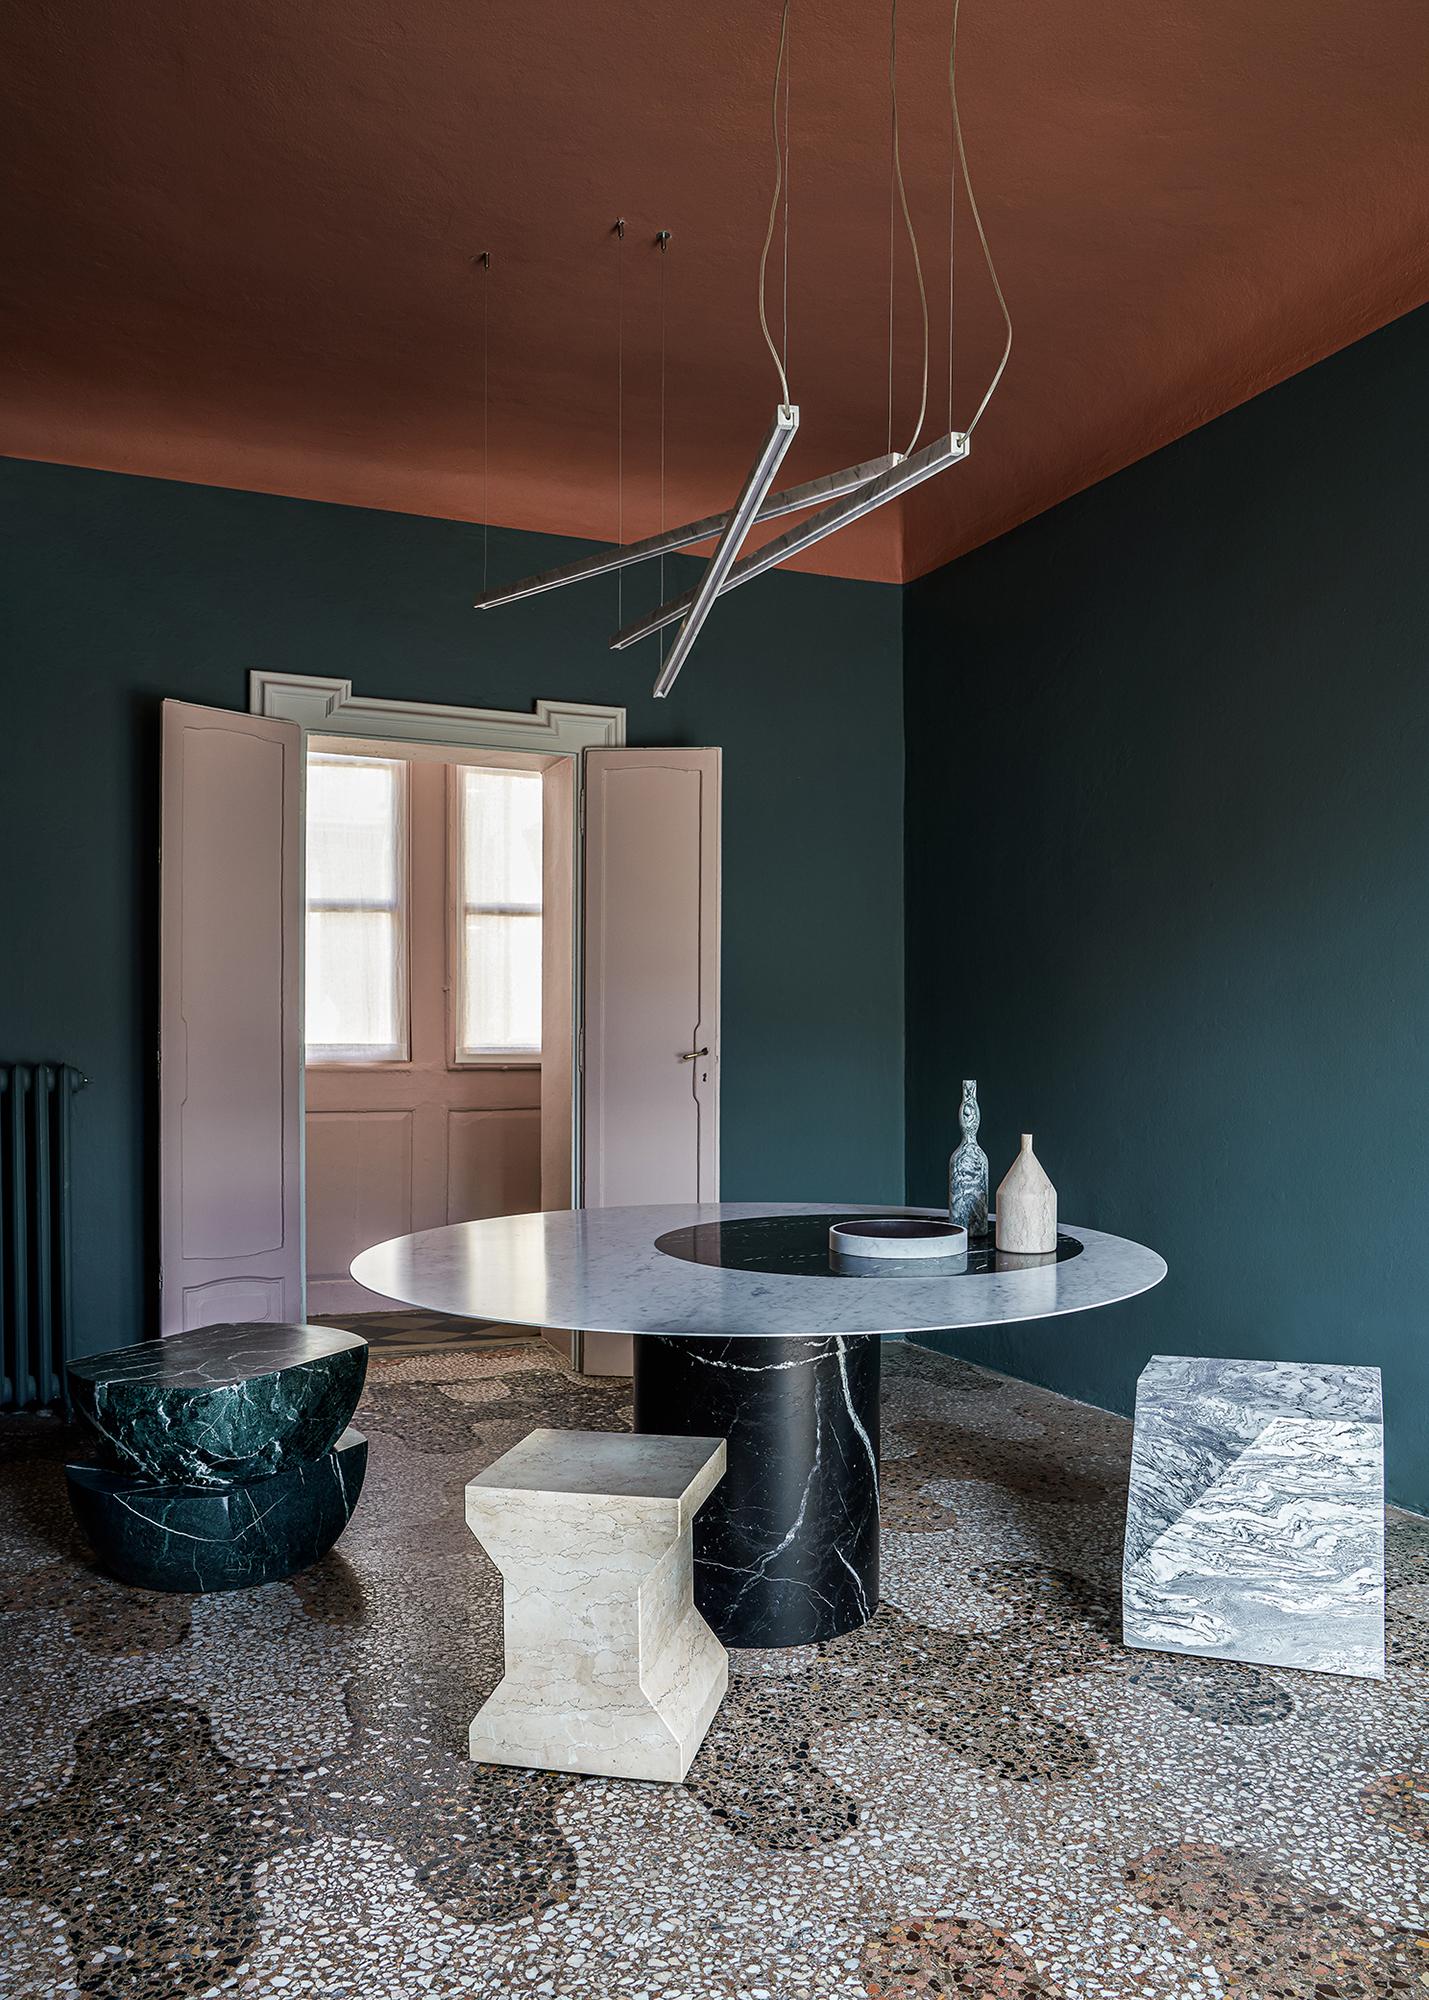 Salvatori Farfalla Ceiling Light in Bianco Carrara Marble by Marco Carini For Sale 2